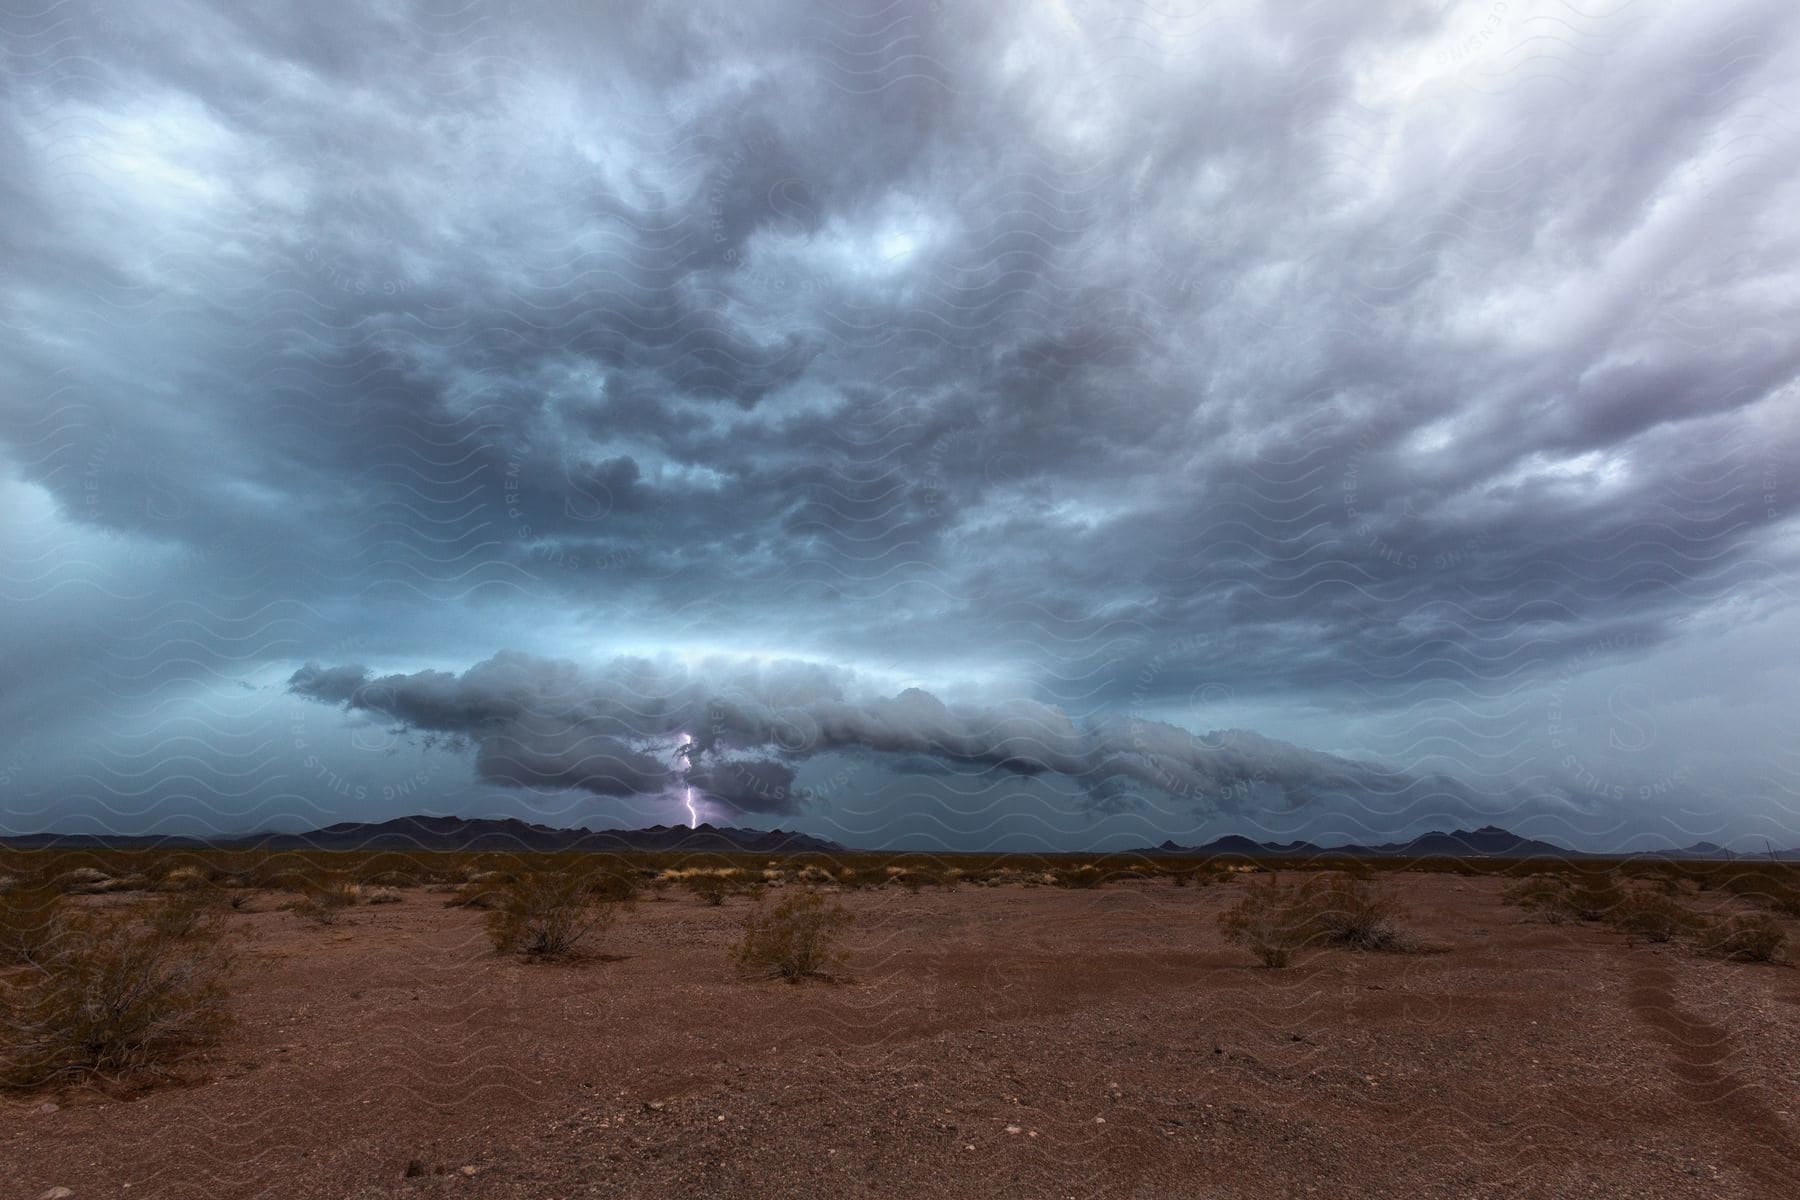 A lightning strike illuminates the sky during a thunderstorm over the trigo mountains in arizona